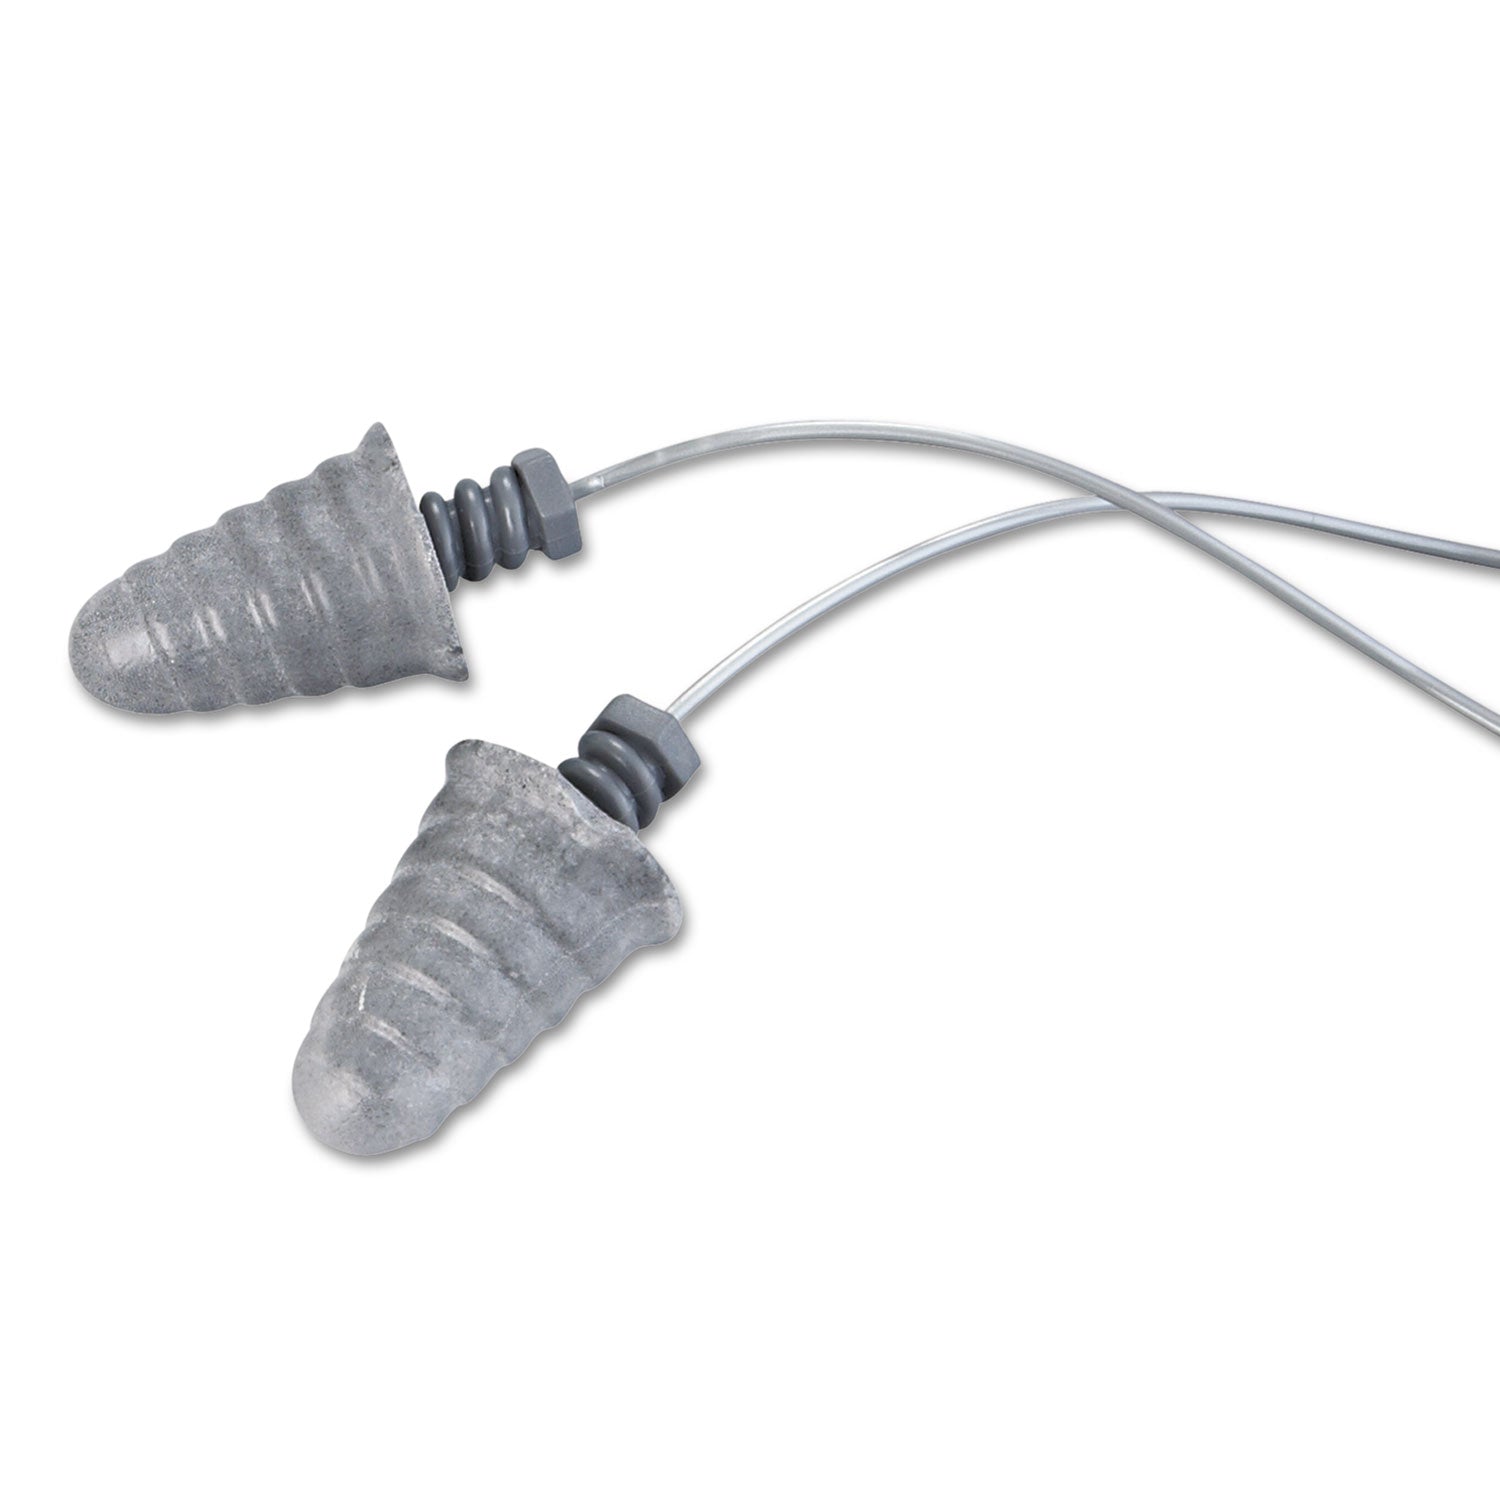 e-a-r-skull-screws-earplugs-corded-32-db-nrr-gray-120-pairs_mmmp1301 - 1